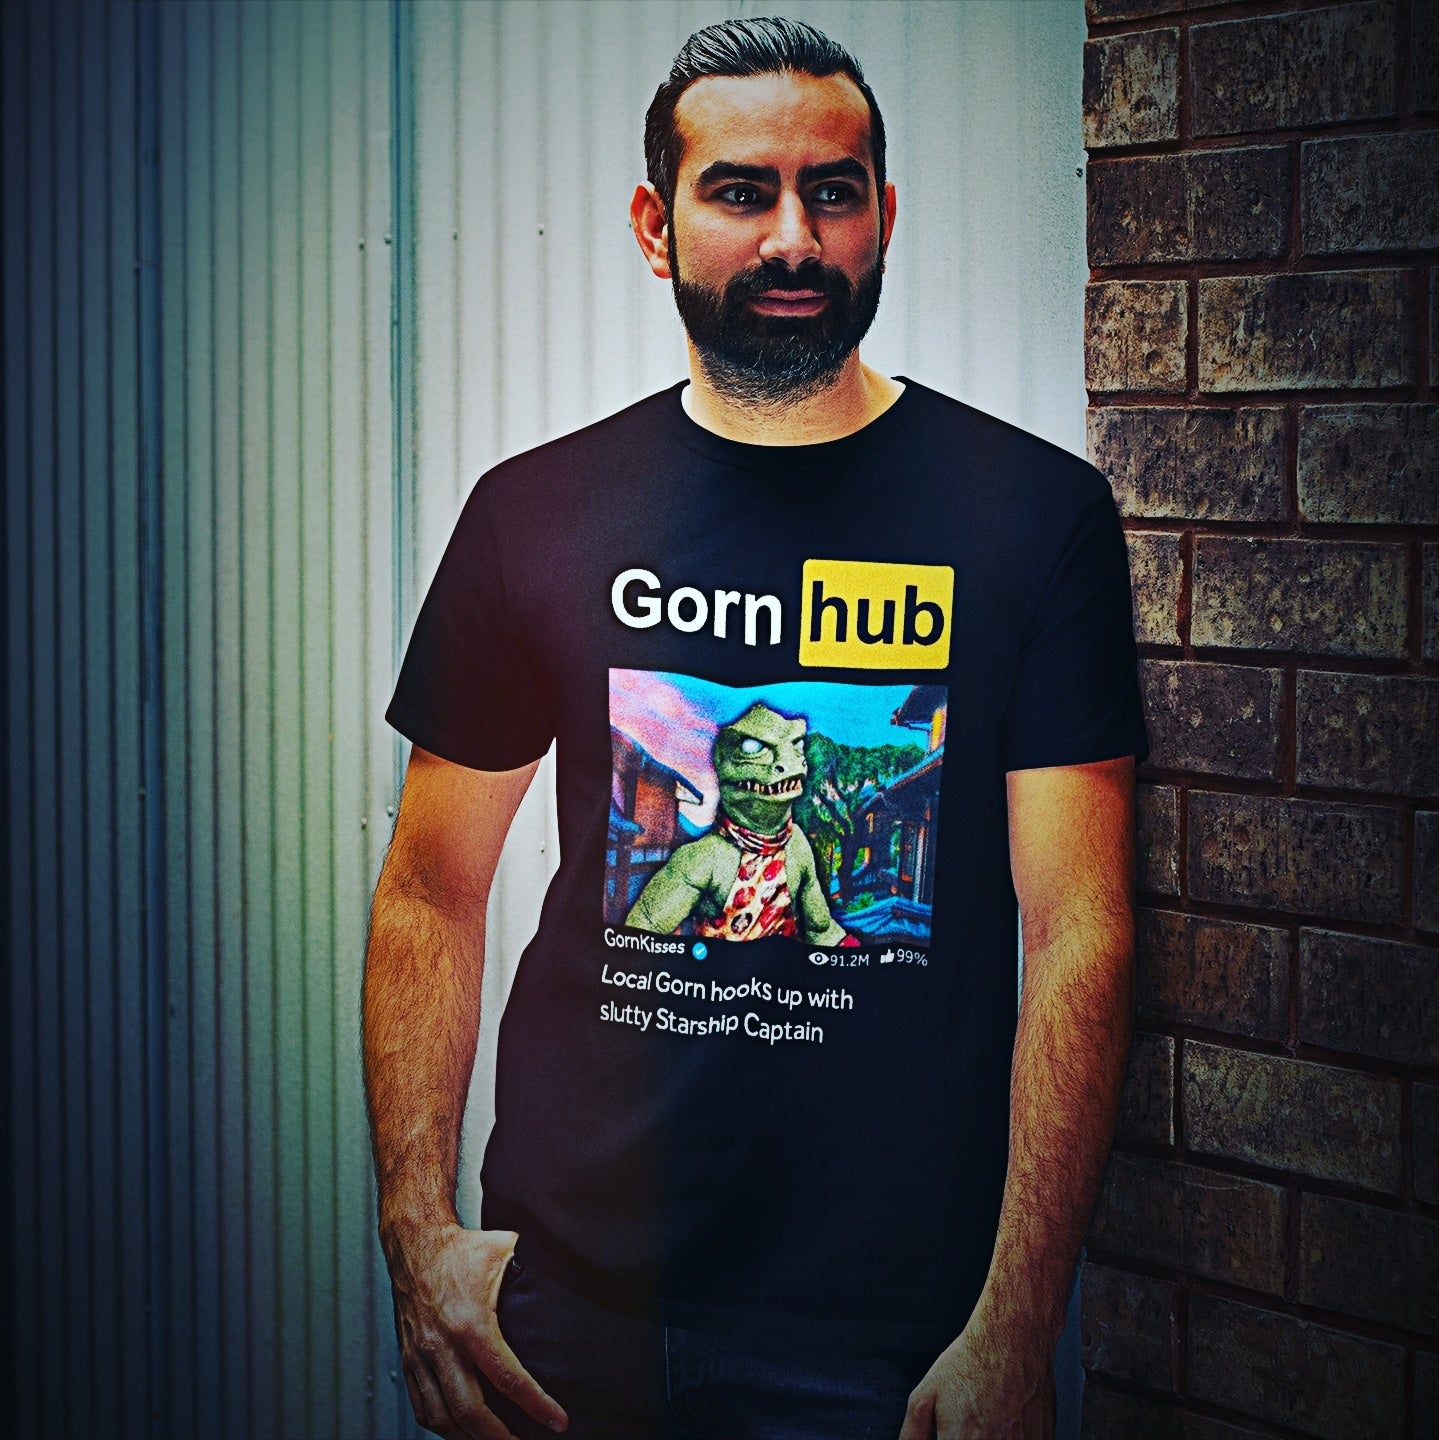 Star Trek t-shirt. Gorn Hub t-shirt.